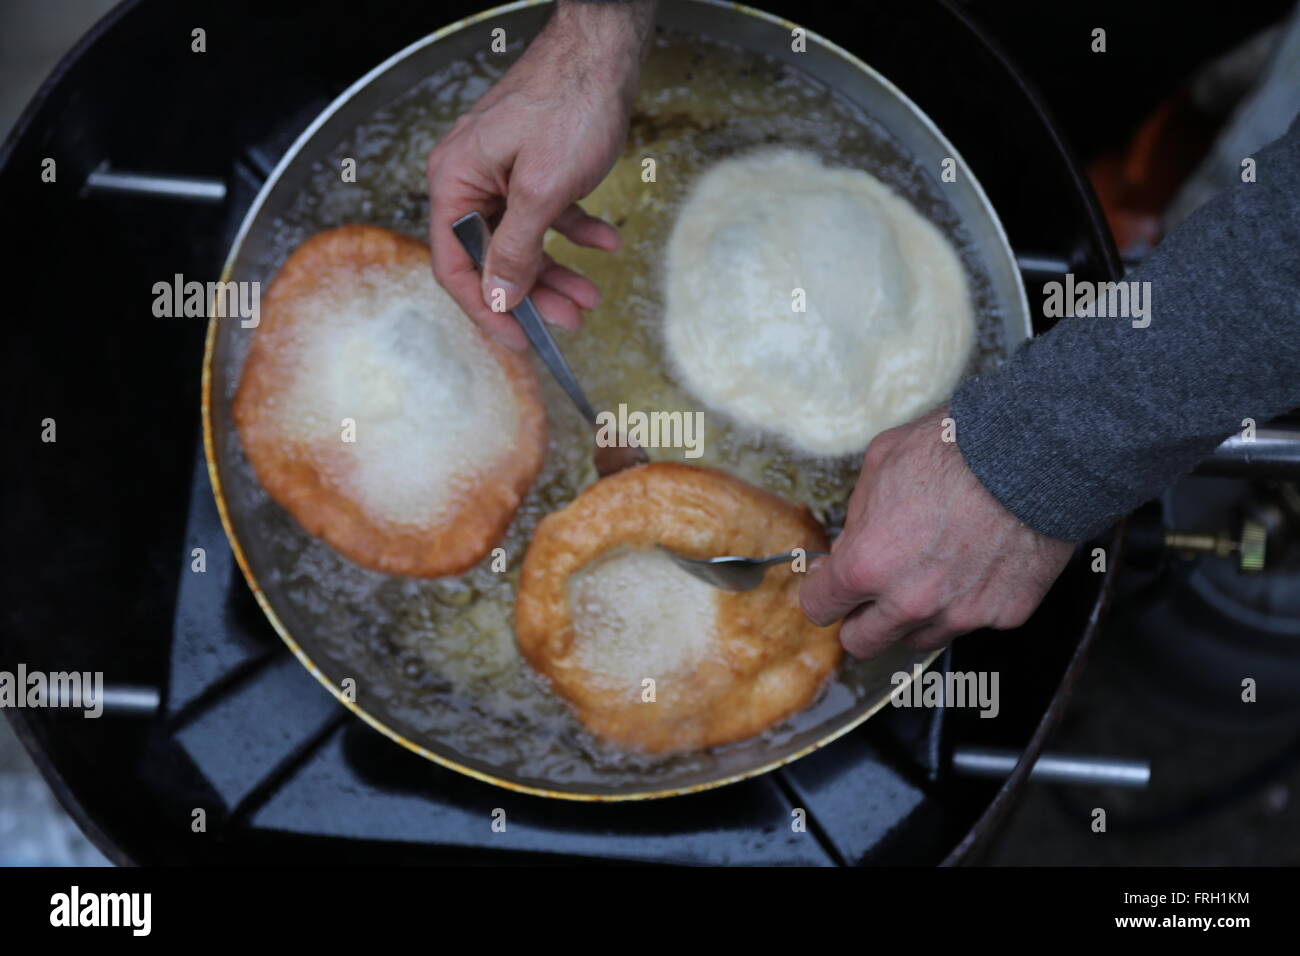 https://c8.alamy.com/comp/FRH1KM/cooking-fritters-dipped-in-boiling-oil-in-an-aluminum-pot-FRH1KM.jpg